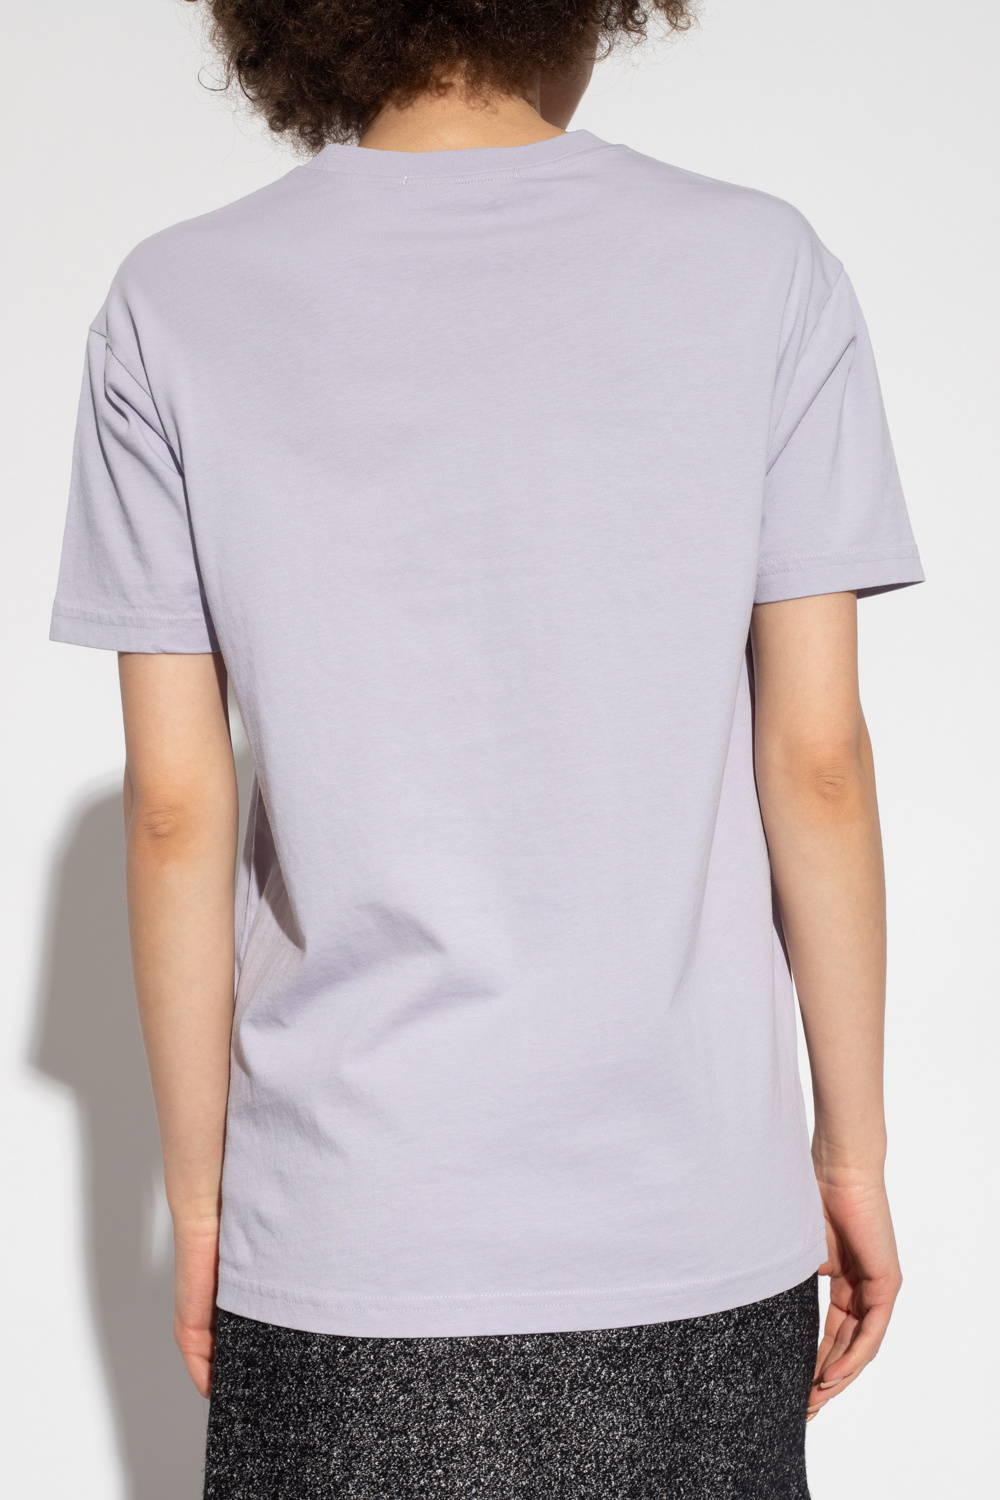 Vivienne Westwood Lucky 13 Amped Kurzärmeliges T-shirt